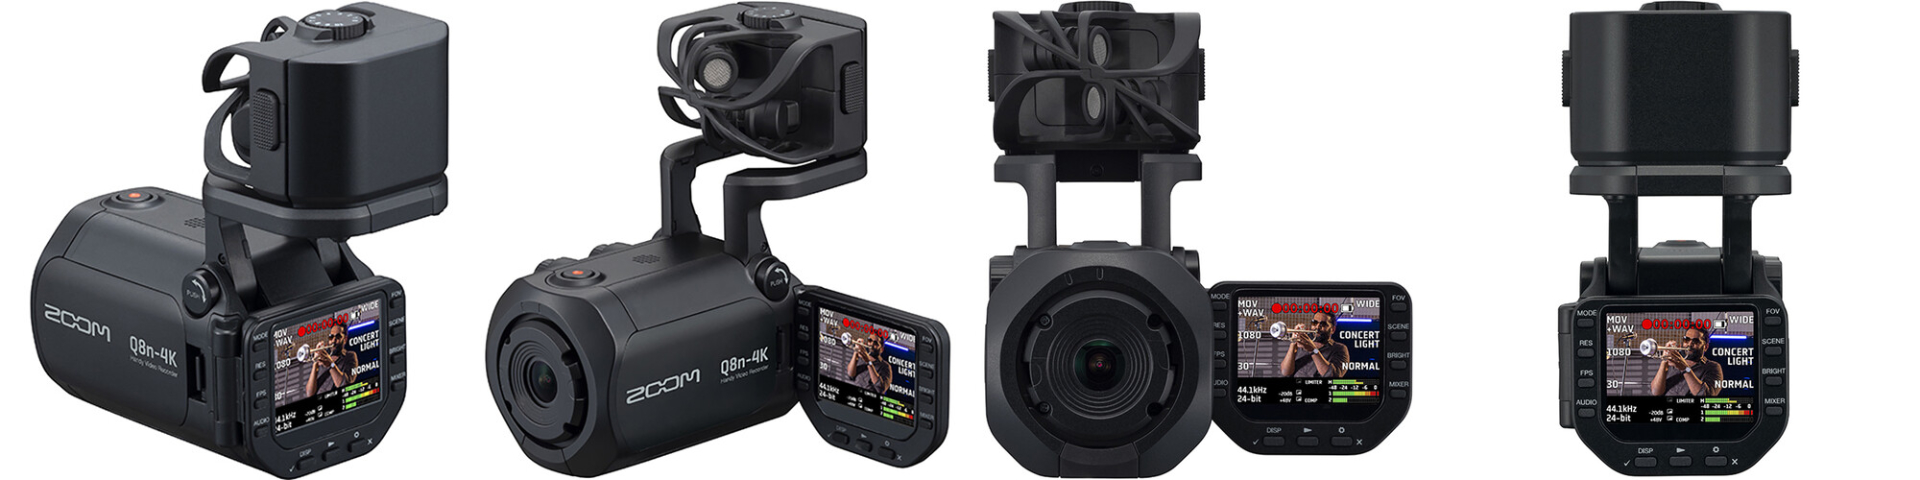 Zoom Q8n-4K Handy Video Recorder Released | CineD